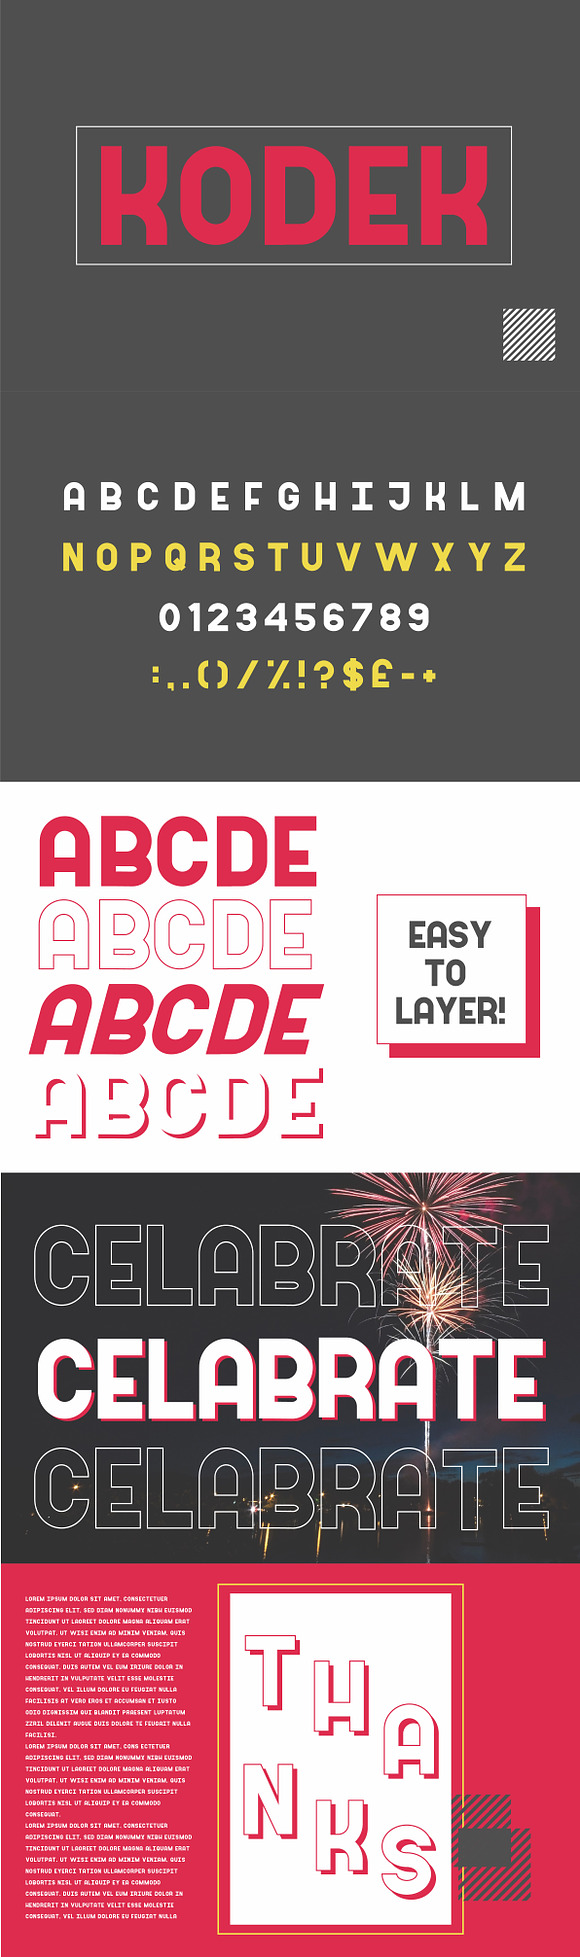 Typeface bundle | 56 Font Styles in Sans-Serif Fonts - product preview 10